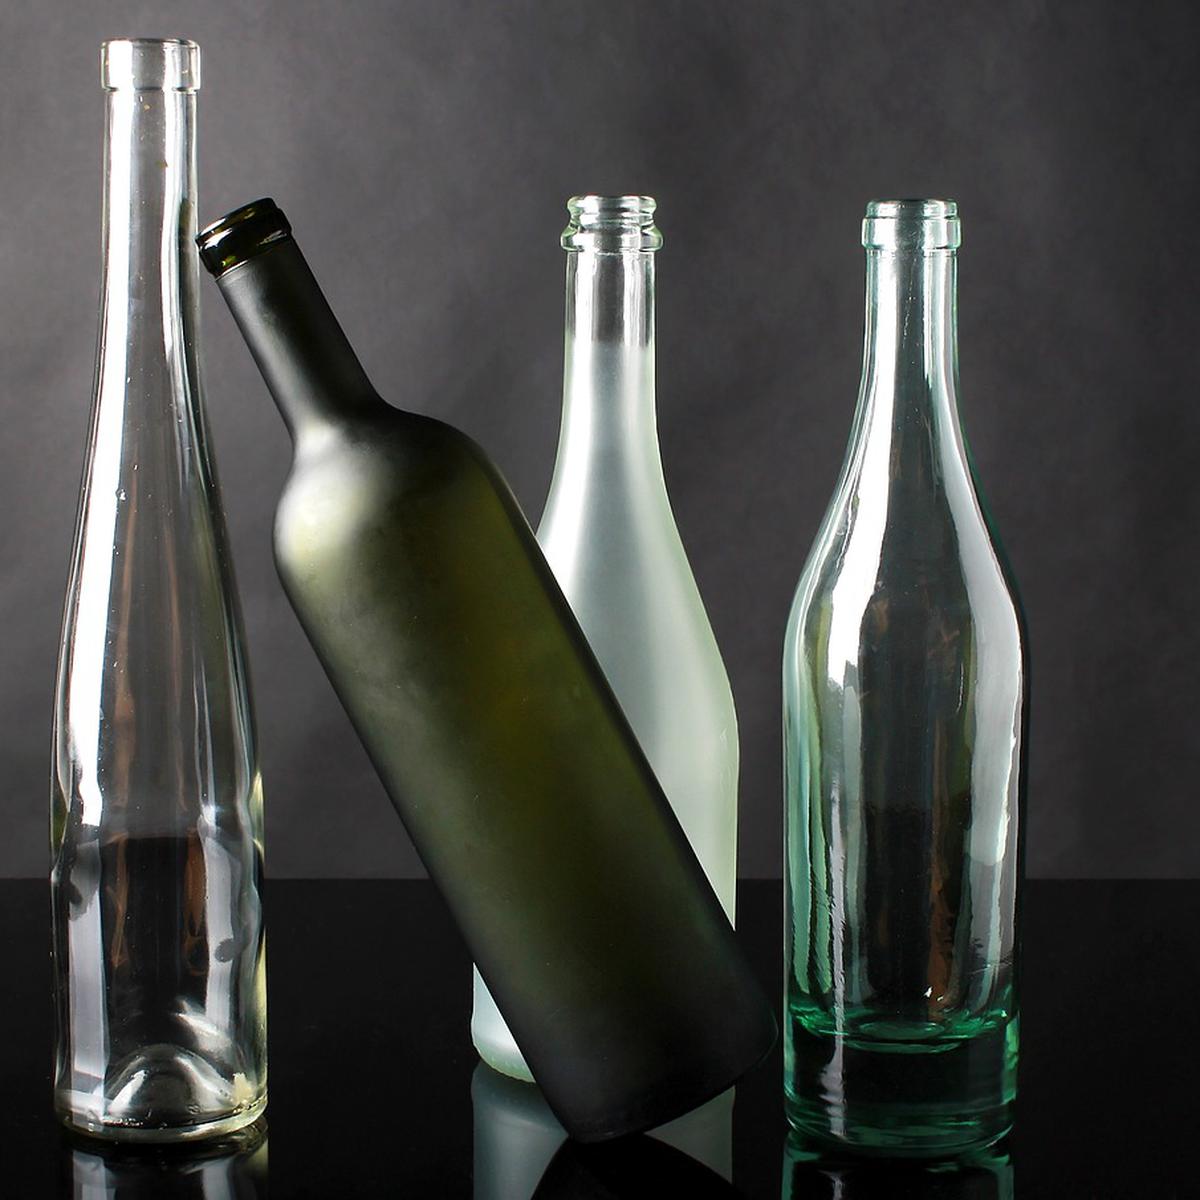 13 formas de decorar con botellas de vidrio que amarás aplicar en tu hogar, Estilo de Vida Hogar